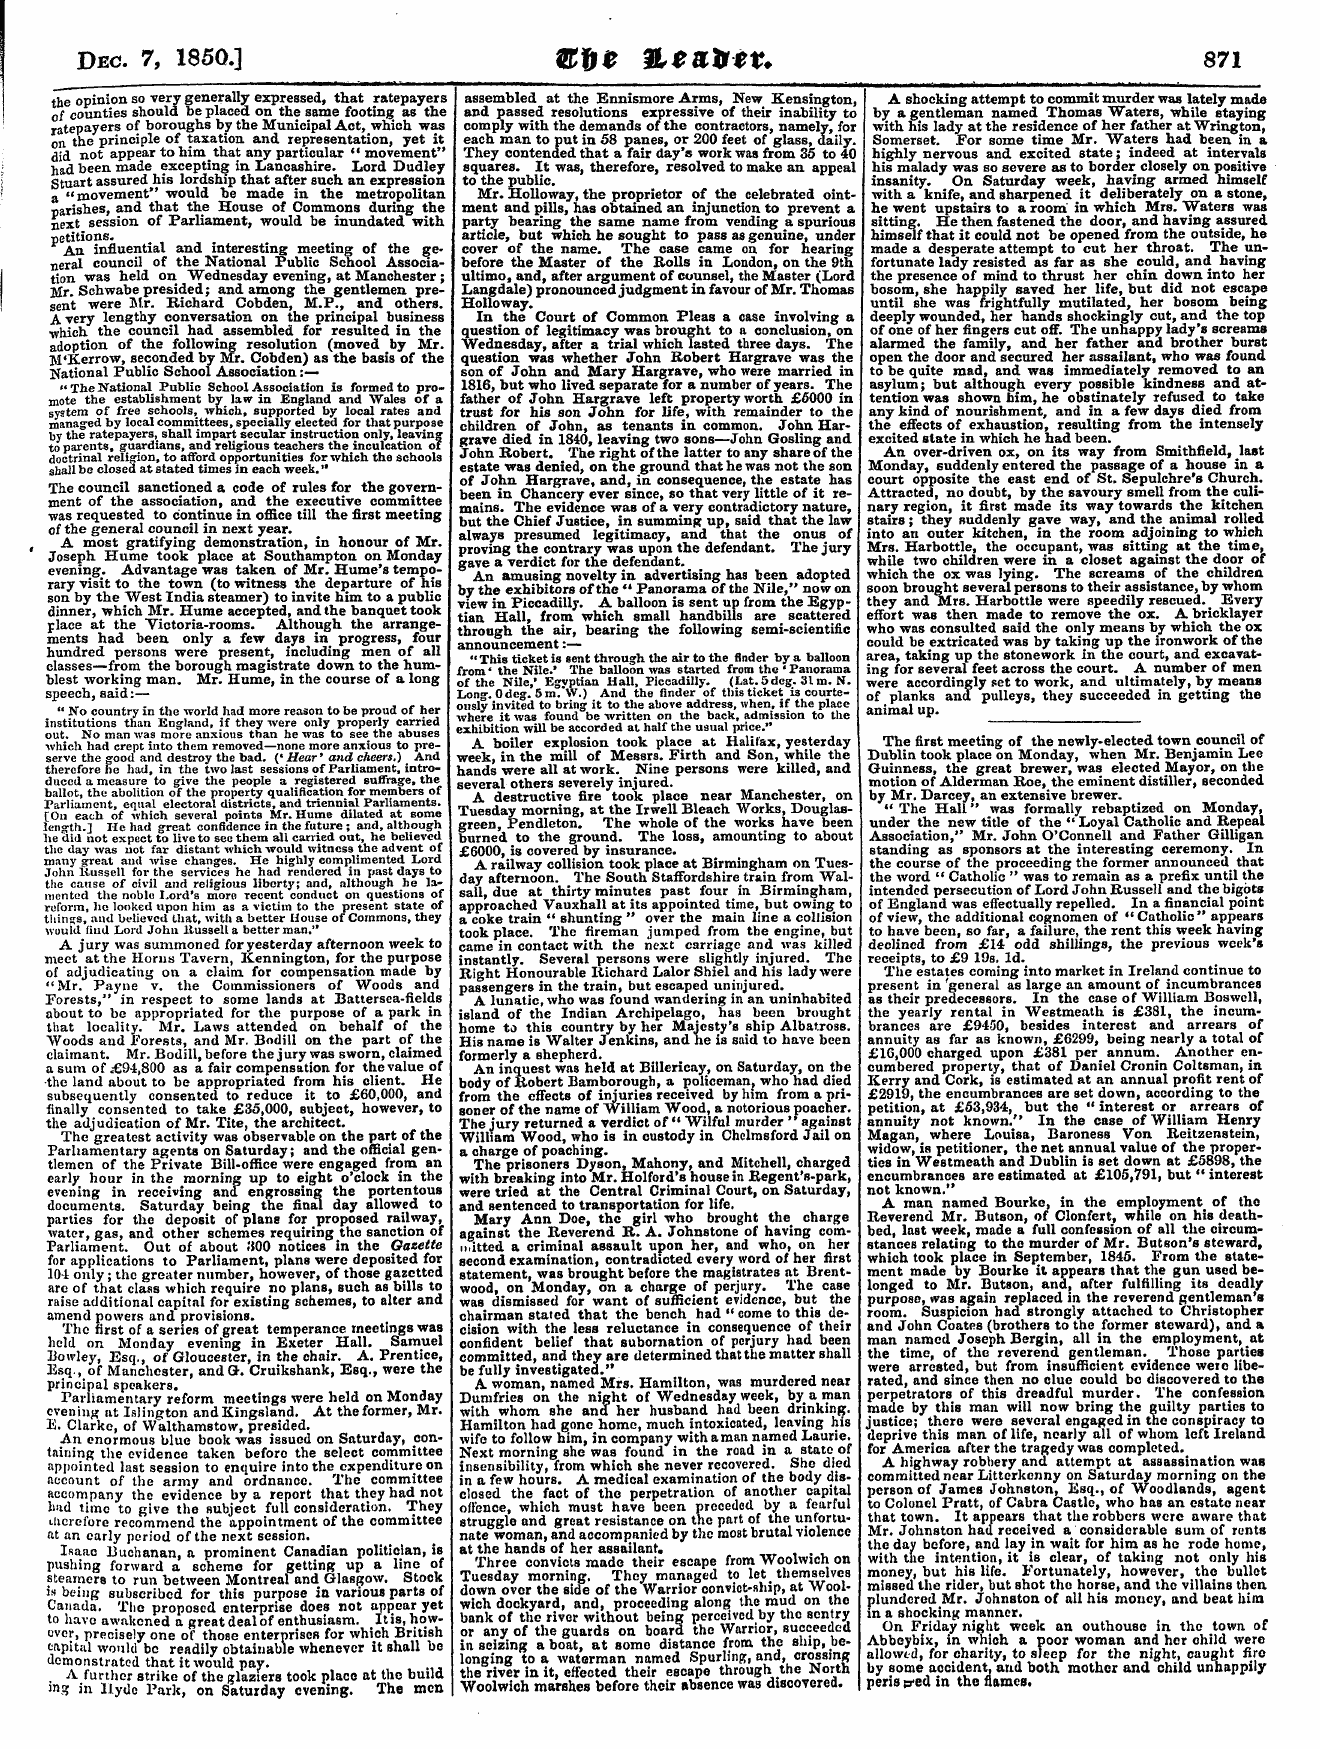 Leader (1850-1860): jS F Y, Country edition - Dec. 7, 1850.] Ffl!Jj£ &£&&*?» 871